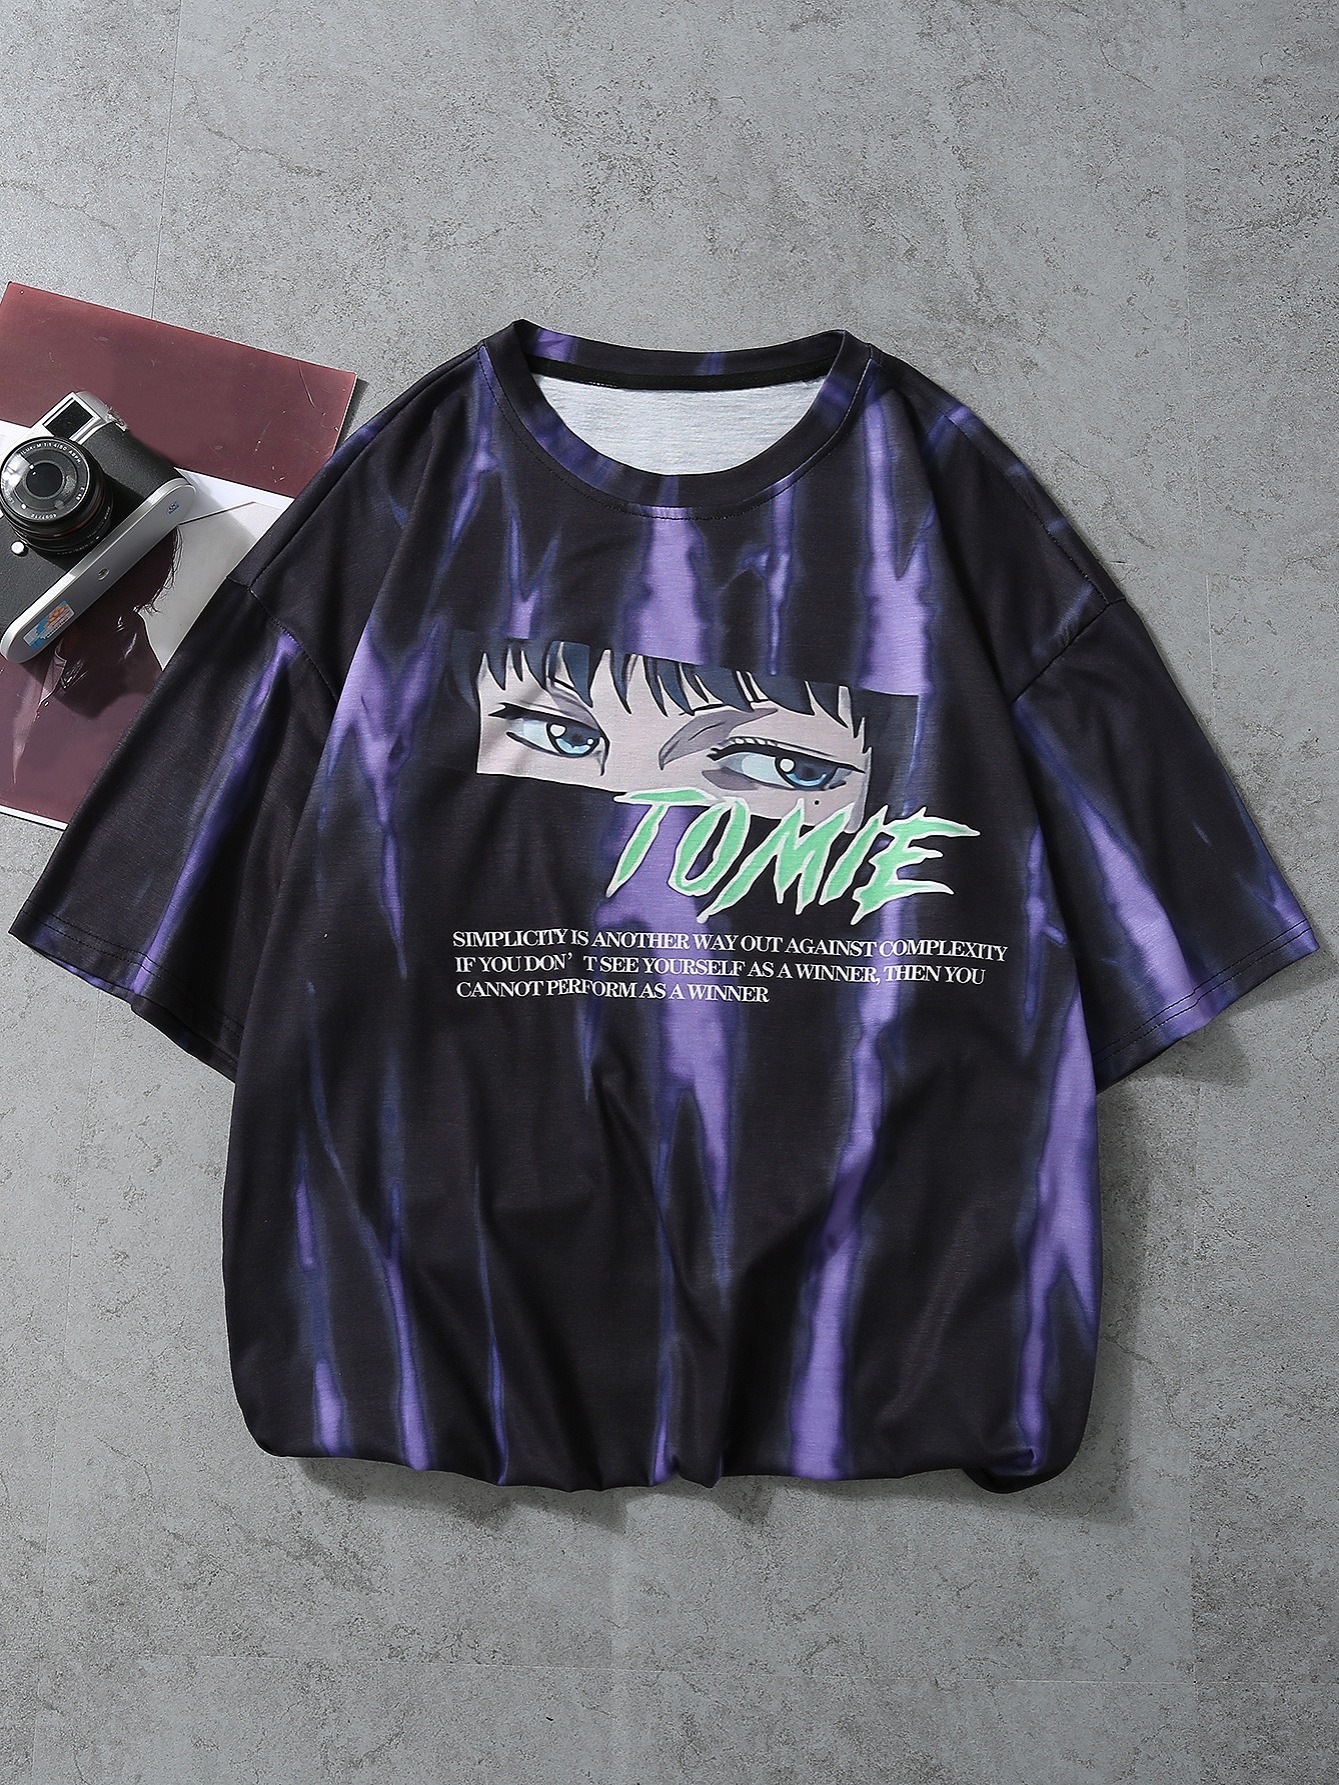 Tokyo Ghoul Japanese Anime Men's Officially Licensed Ken Kaneki Split Face  Tie-Dye Tee T-Shirt (Small, Purple/Black/Green Tie Dye) - Walmart.com